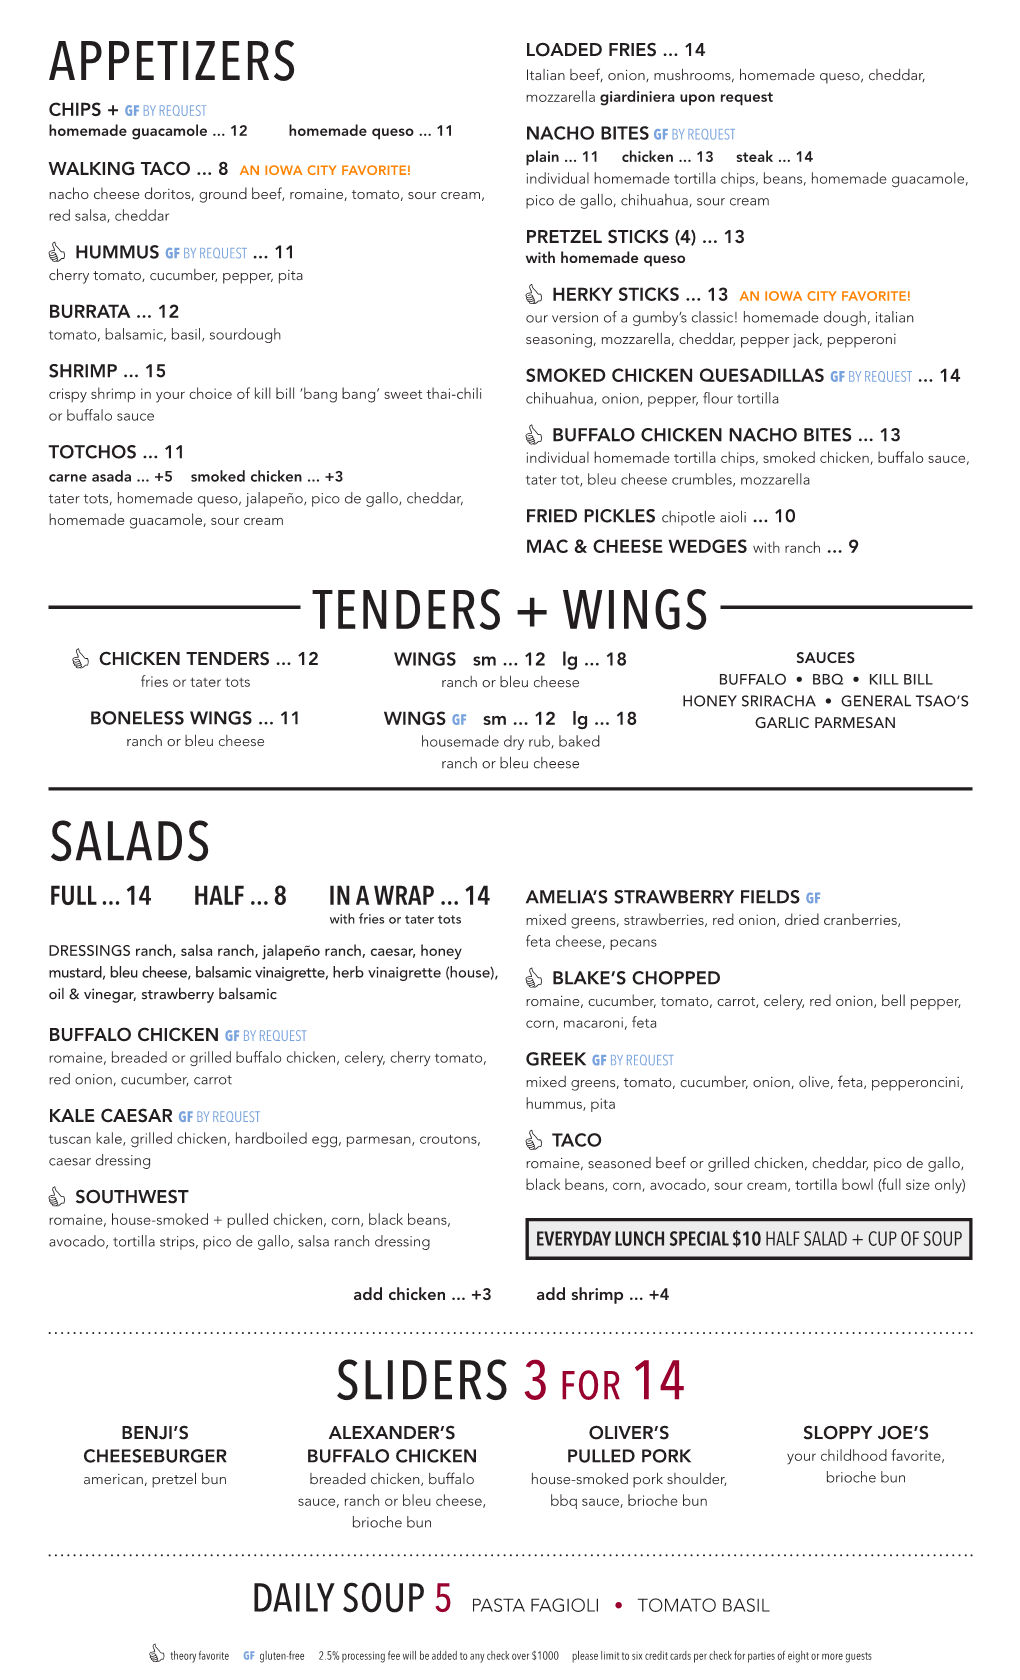 Appetizers Salads Sliders 3 for 14 Tenders + Wings